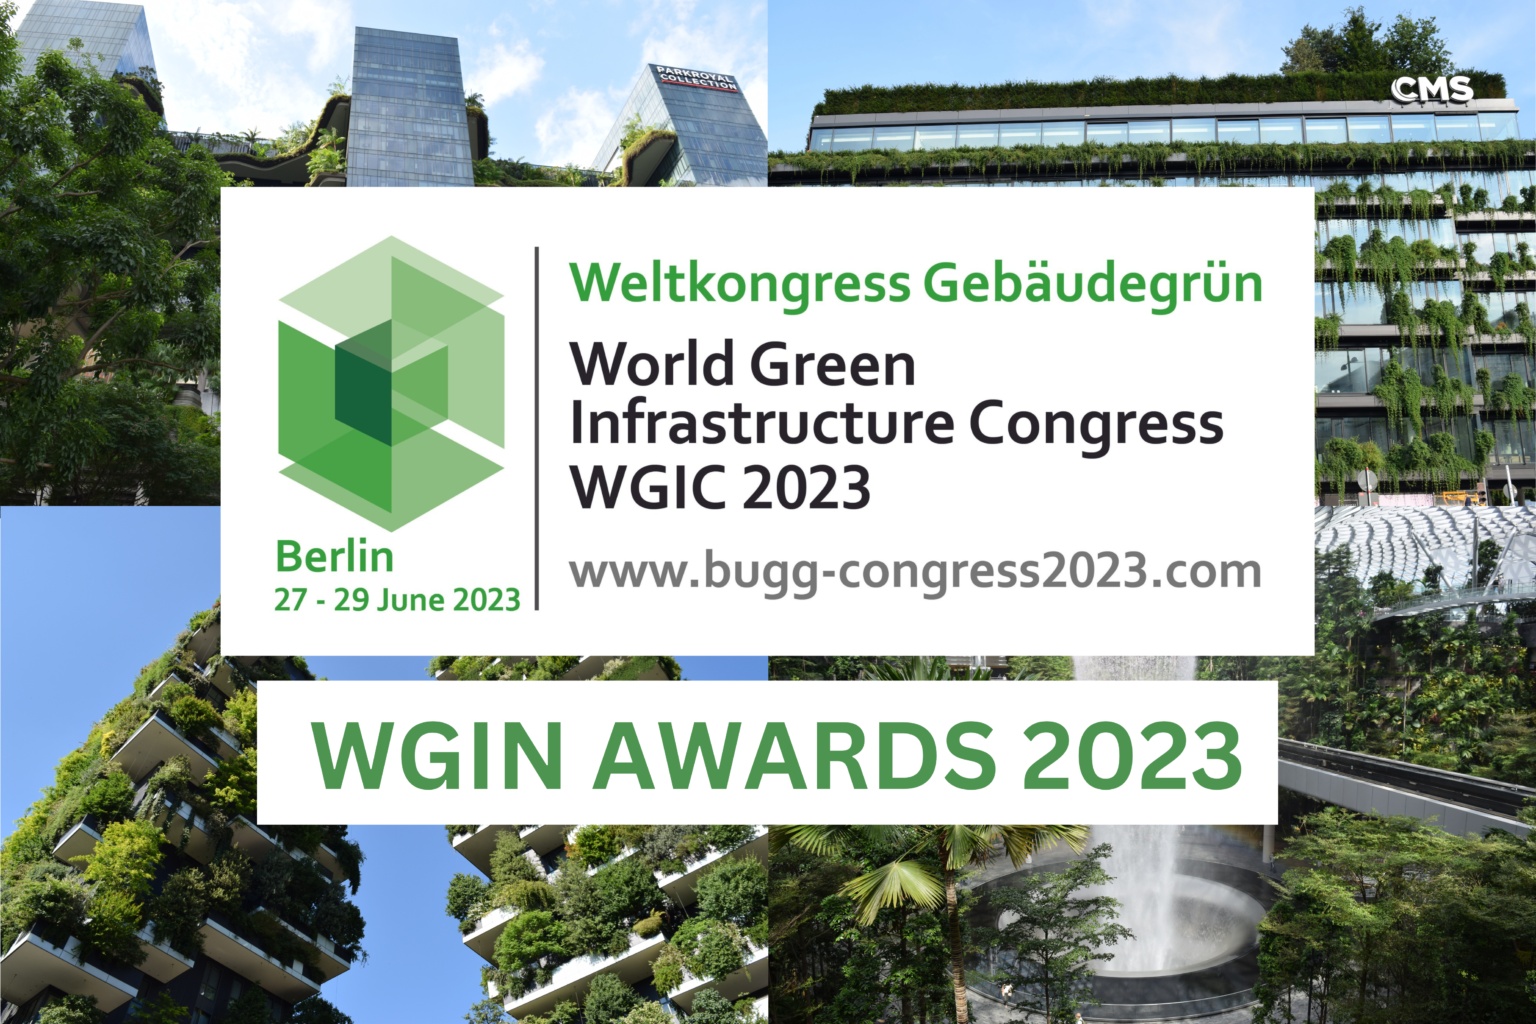 WGIC Berlin Deadlines May 26 Registration & May 31 WGIN Awards